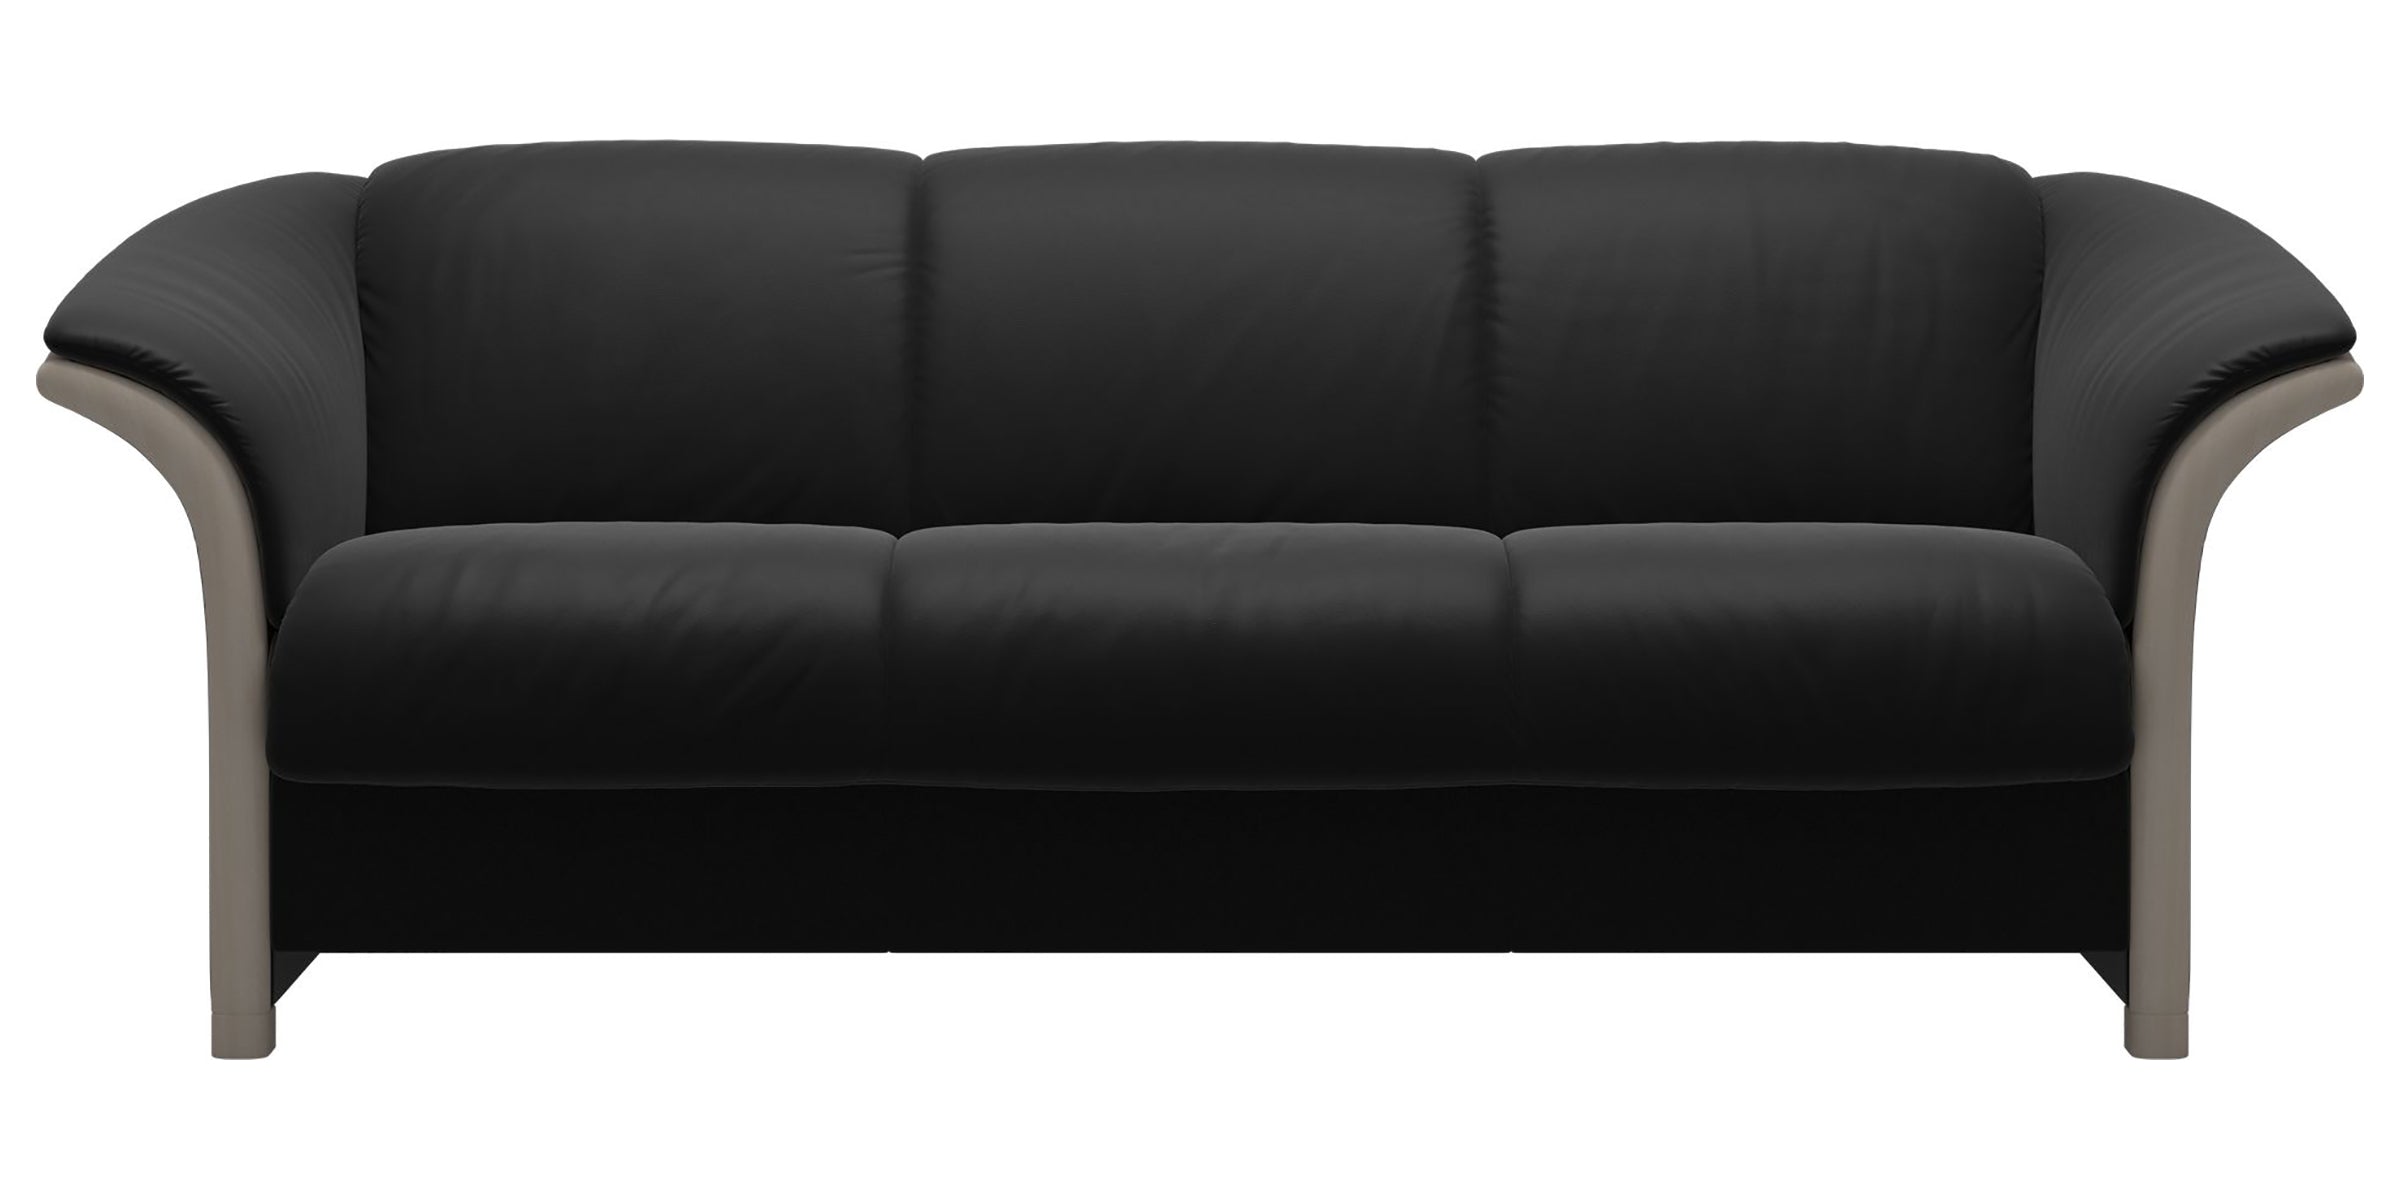 Paloma Leather Black and Whitewash Arm Trim | Stressless Manhattan Sofa | Valley Ridge Furniture